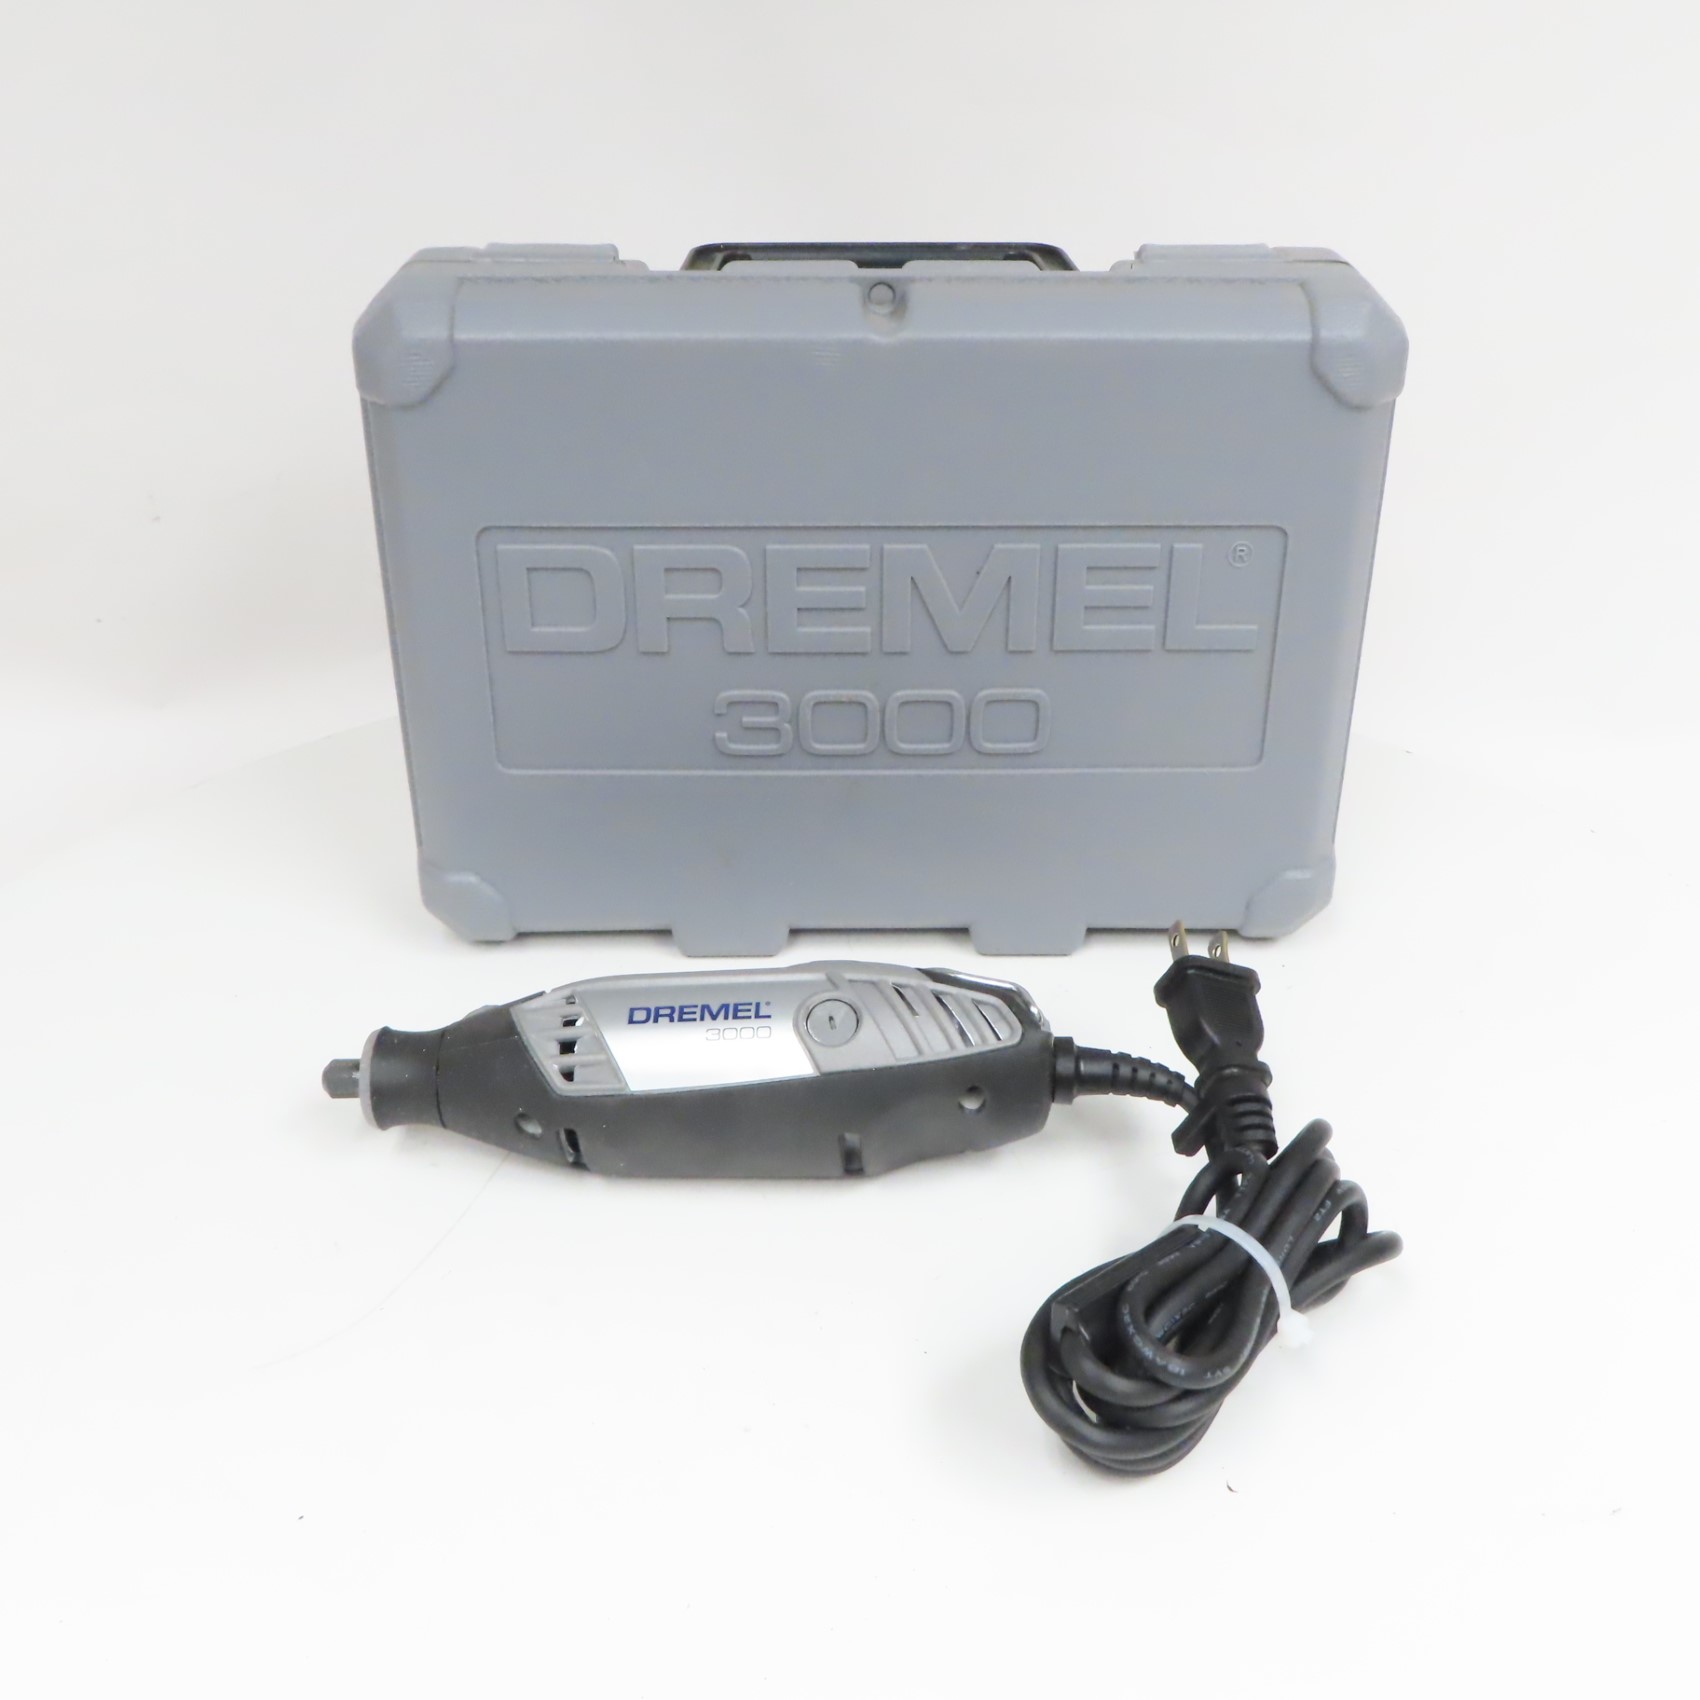 Dremel 3000 120V Variable Speed Corded Rotary Tool (7215)